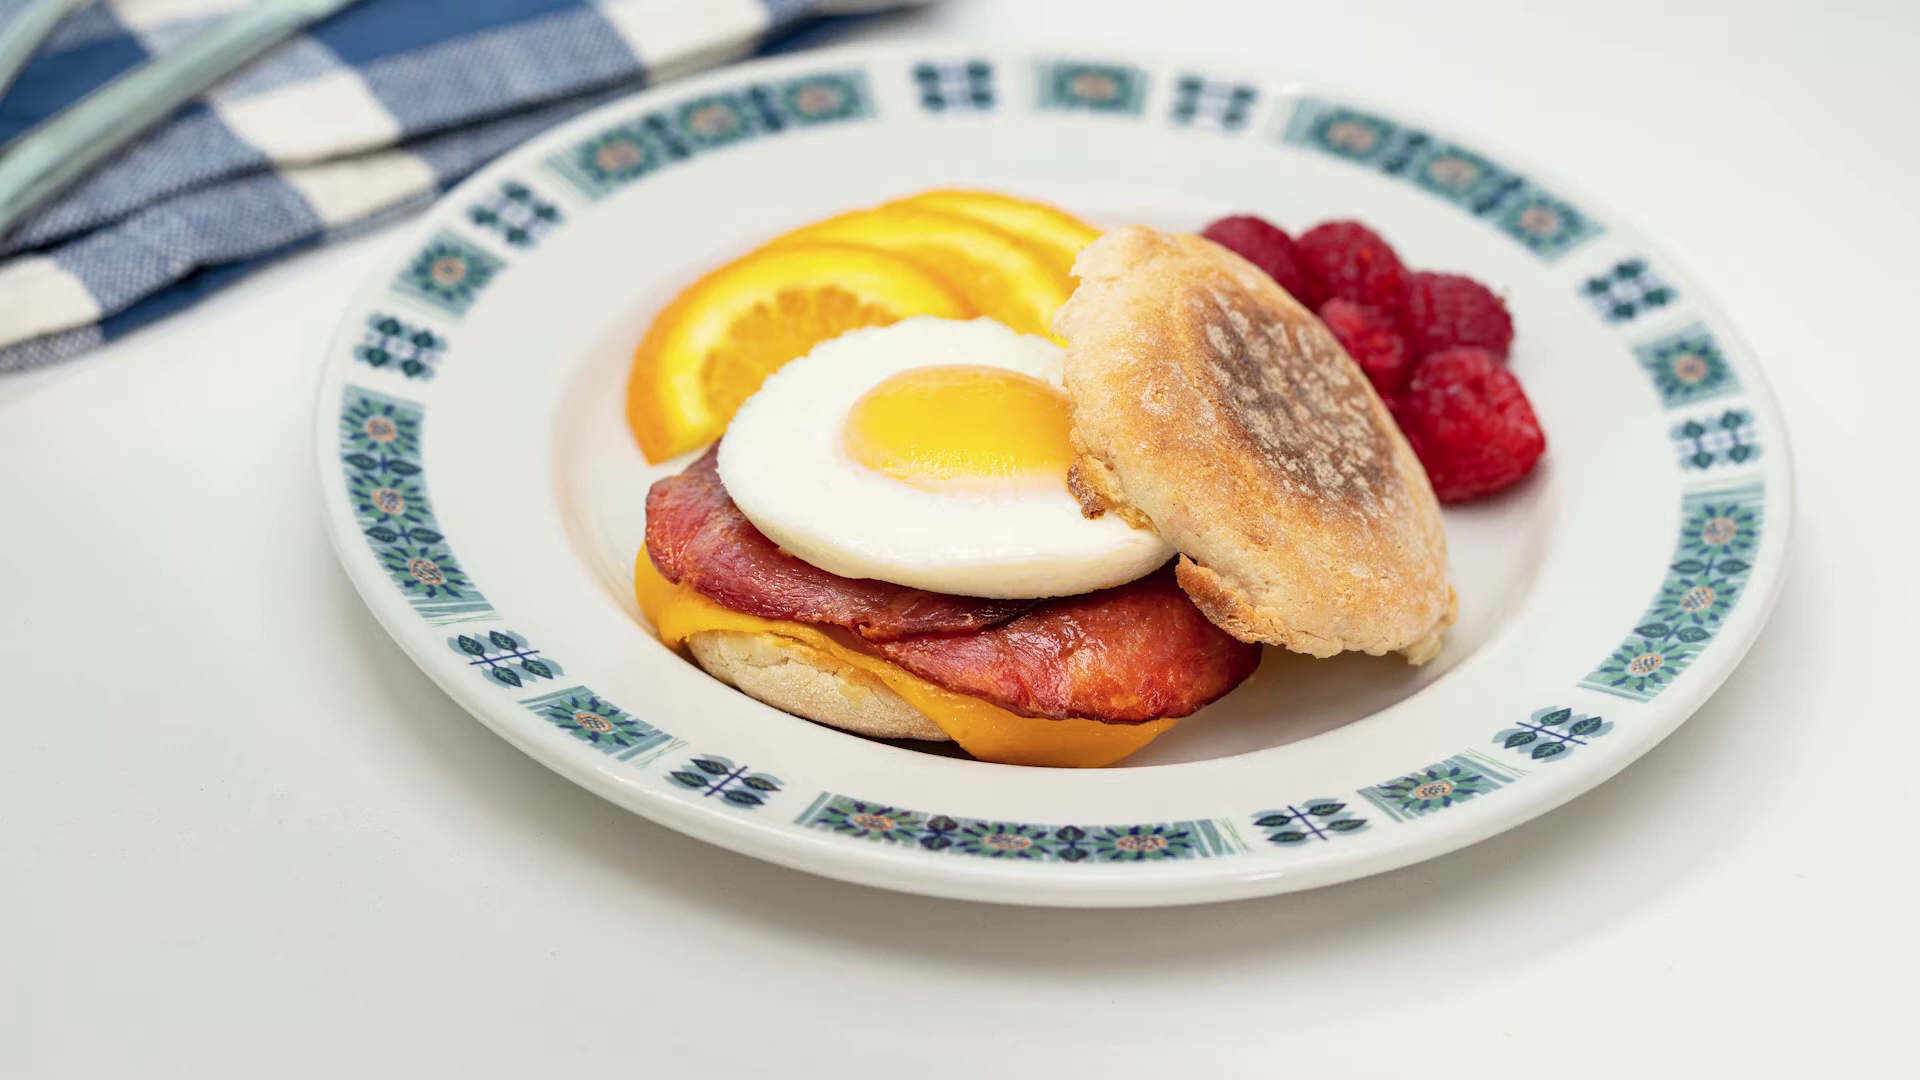 Turkey bacon and egg emglish muffin breakfast sandwich on plate